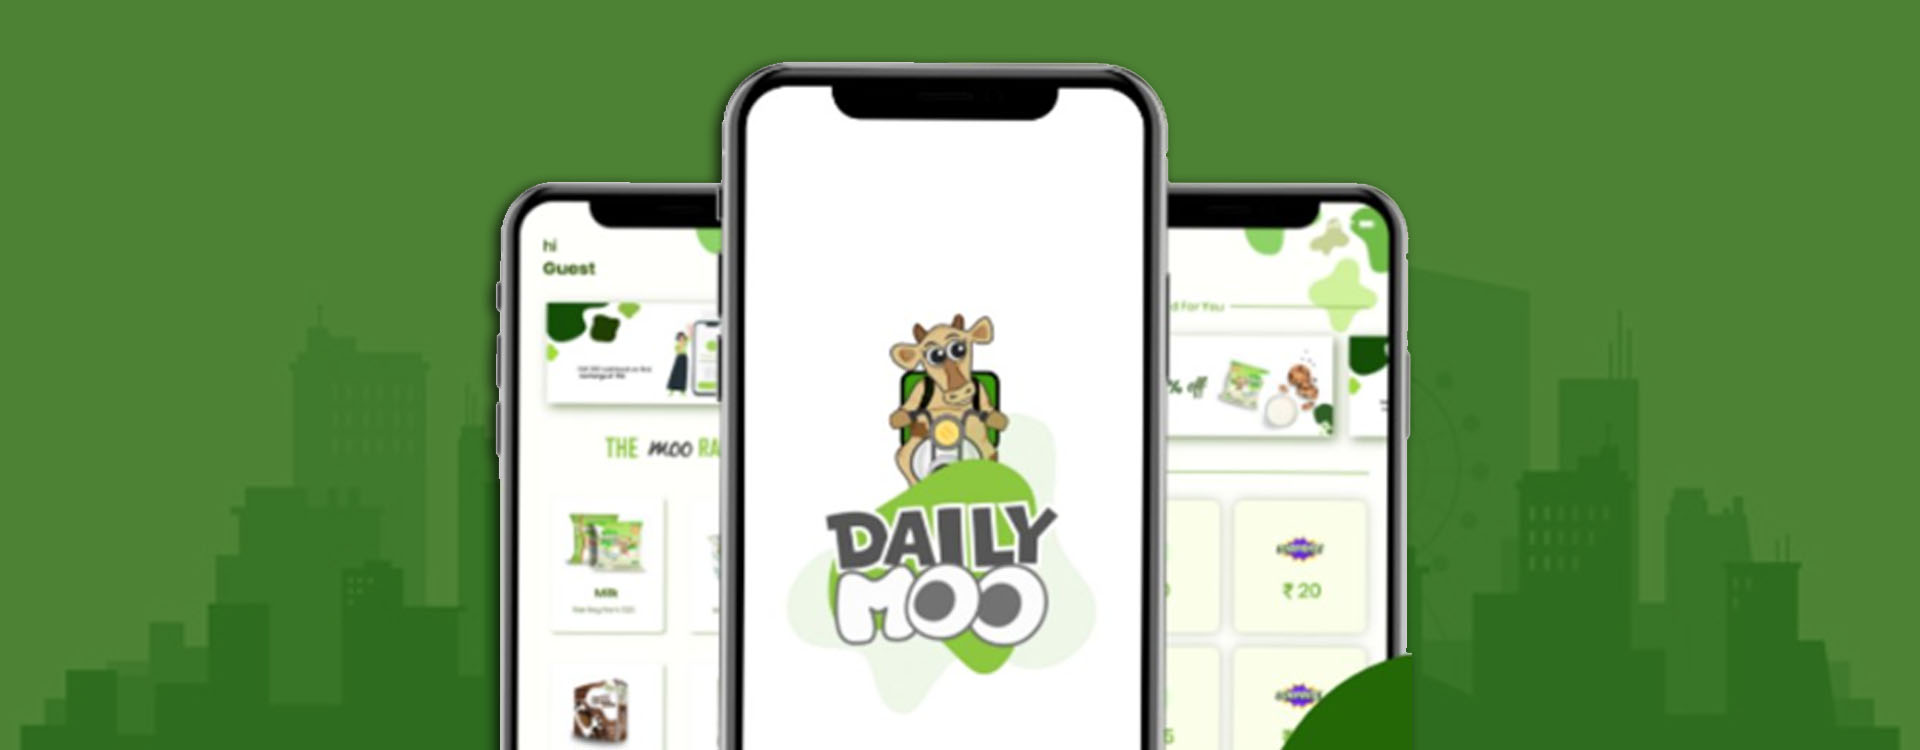 Milk Mantra app DailyMoo's growth